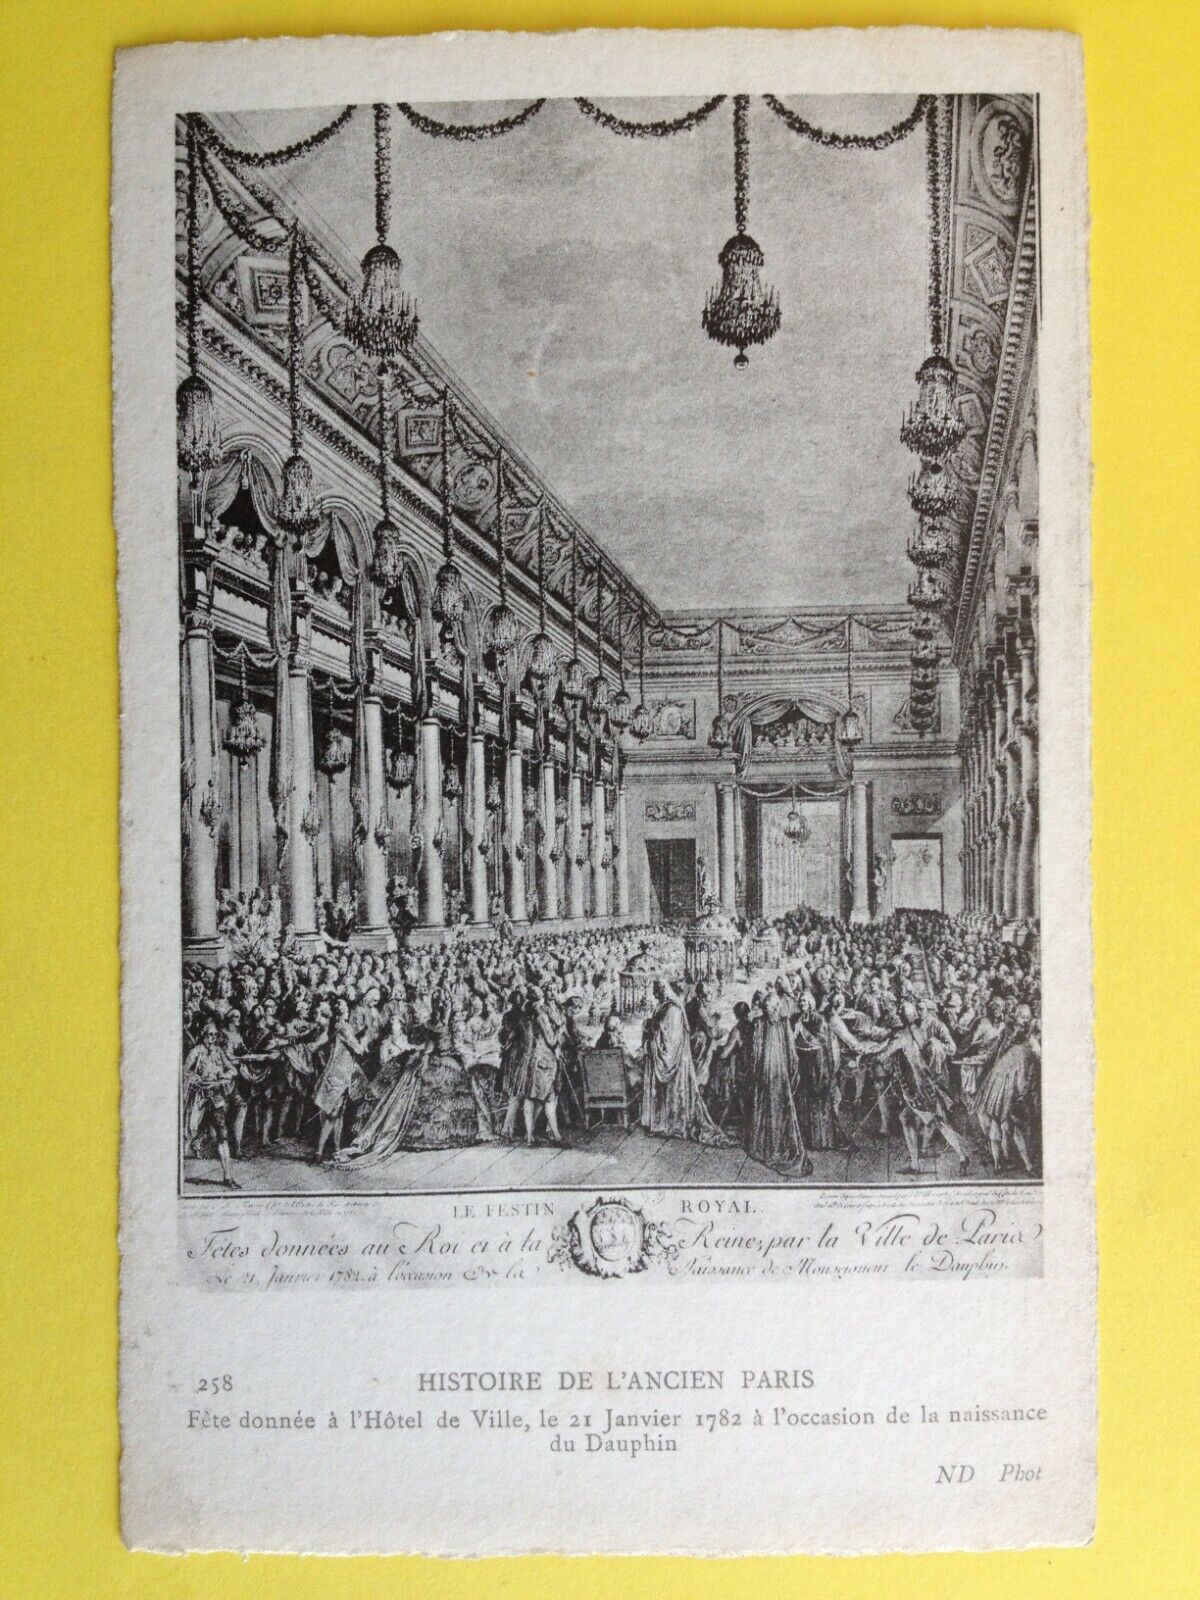 cp engraving paper vergé ANCIENT HISTORY PARIS festival royal feast in 1782 Dauphin